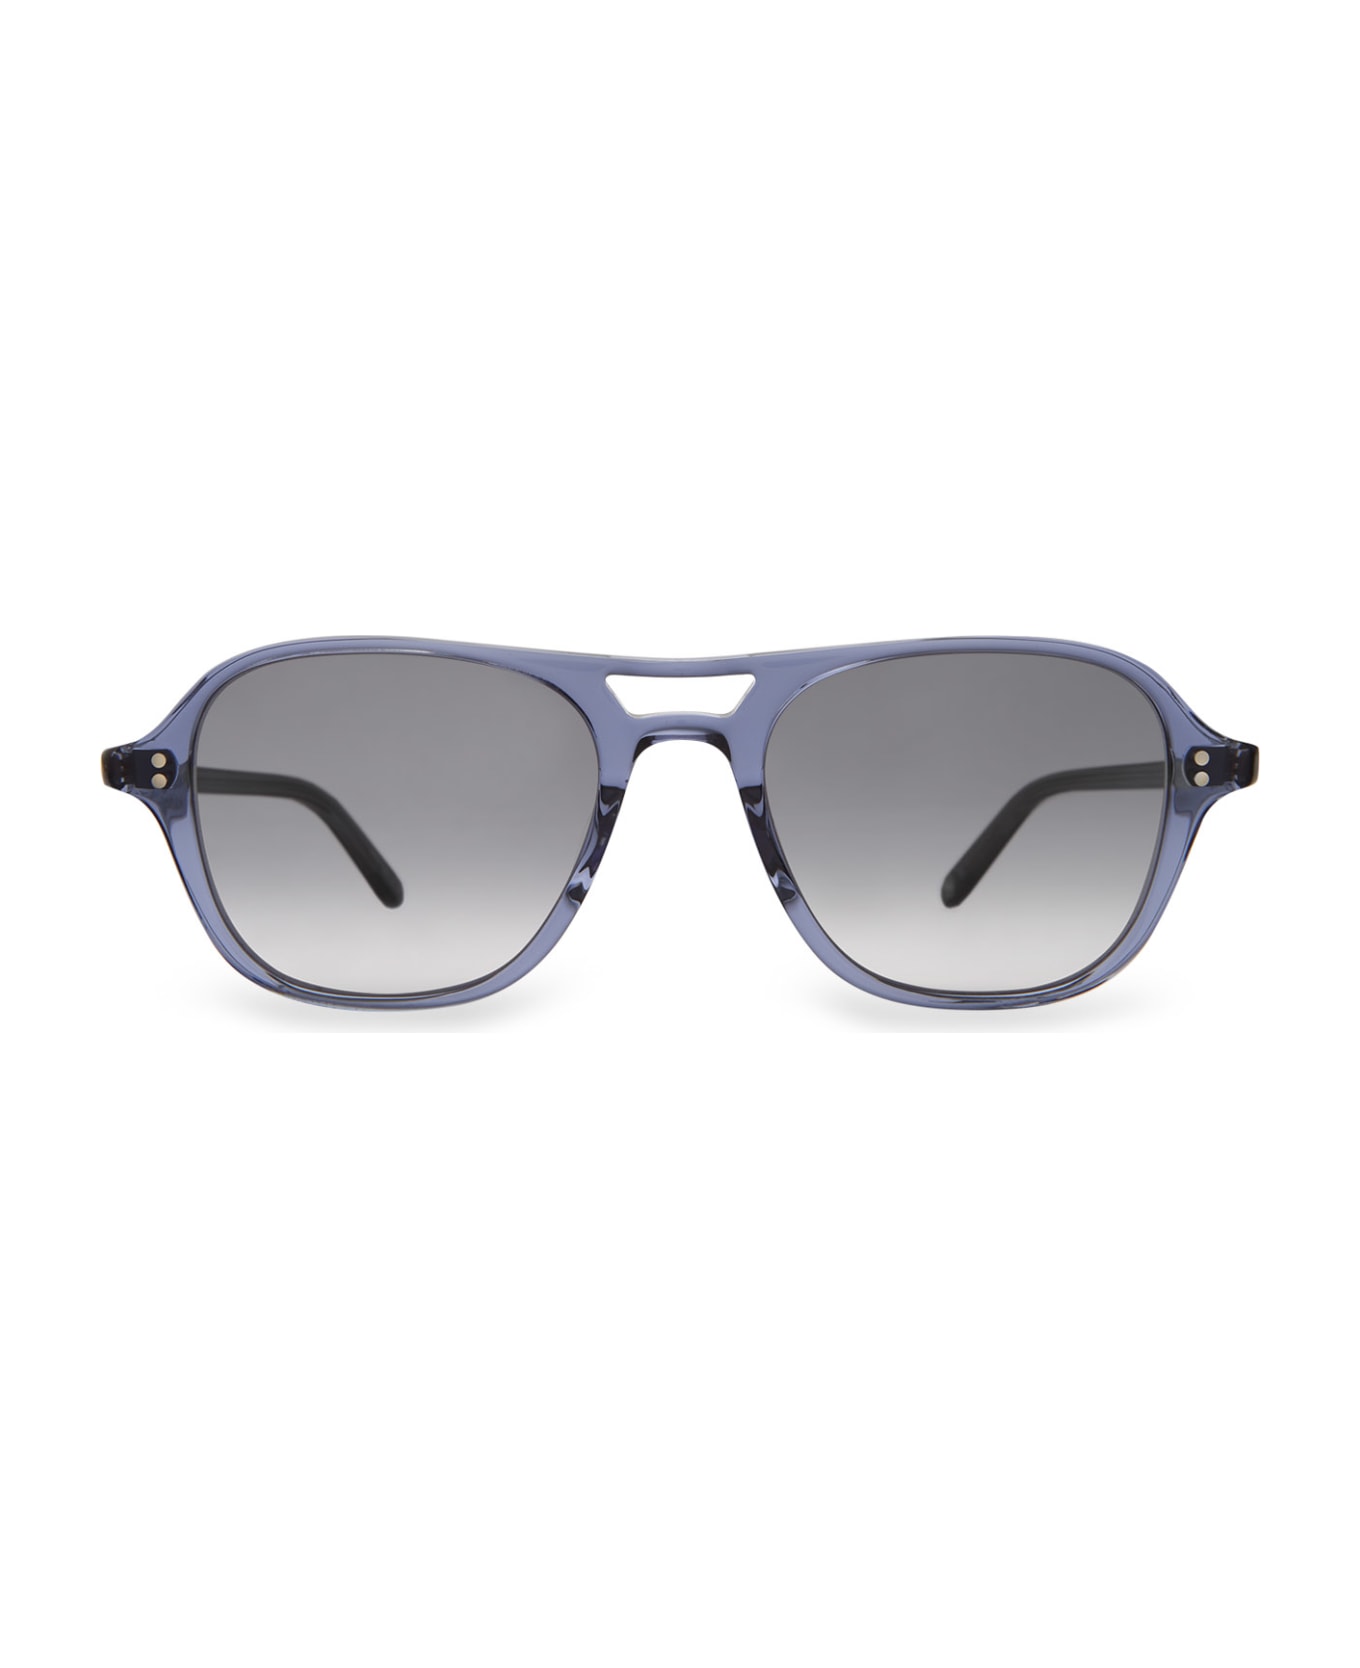 Garrett Leight Doc Sun Pacific Blue Sunglasses - Pacific Blue サングラス